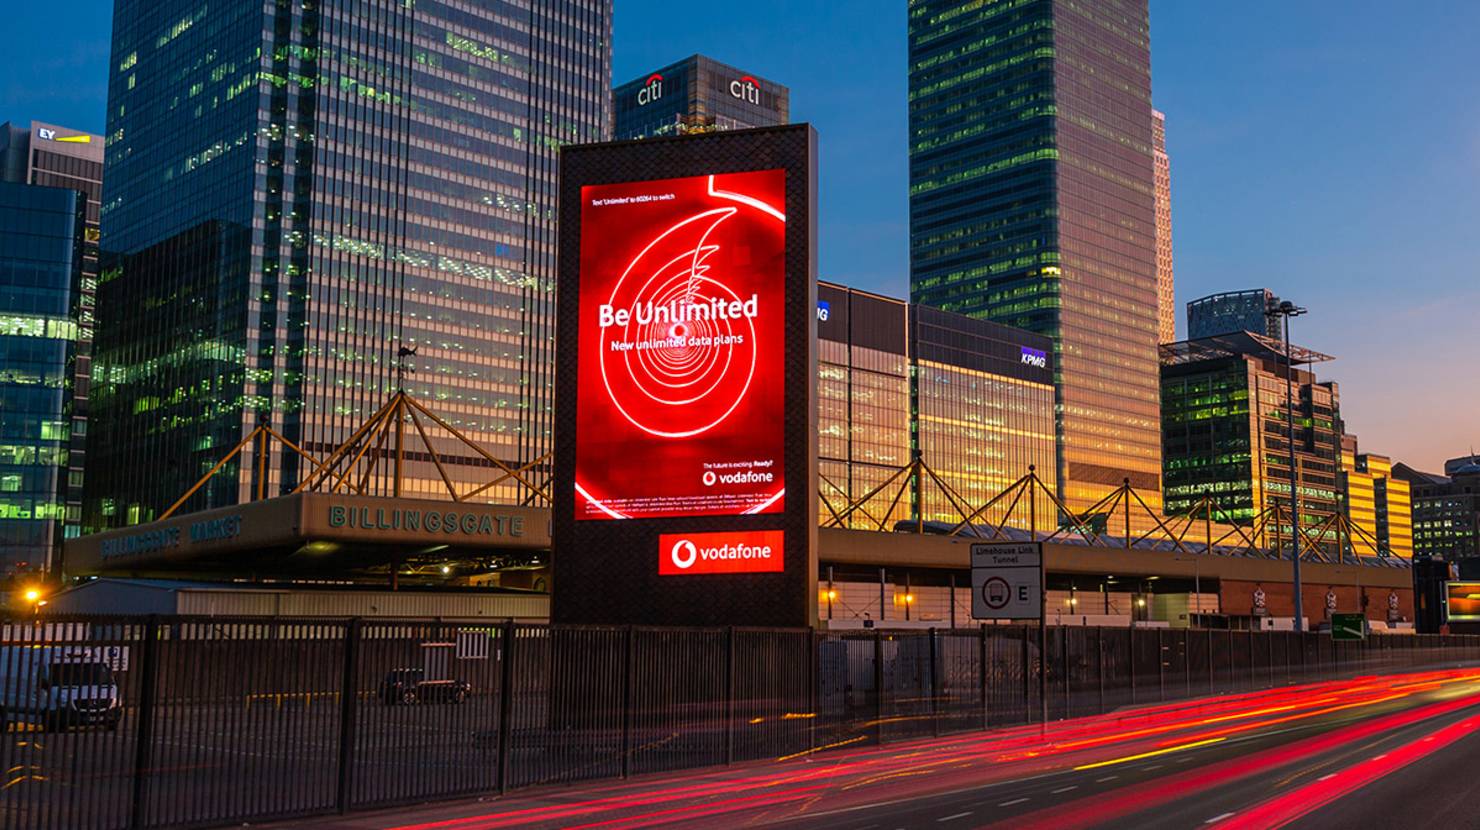 Mobile brand on a premium large format digital billboard at sunset